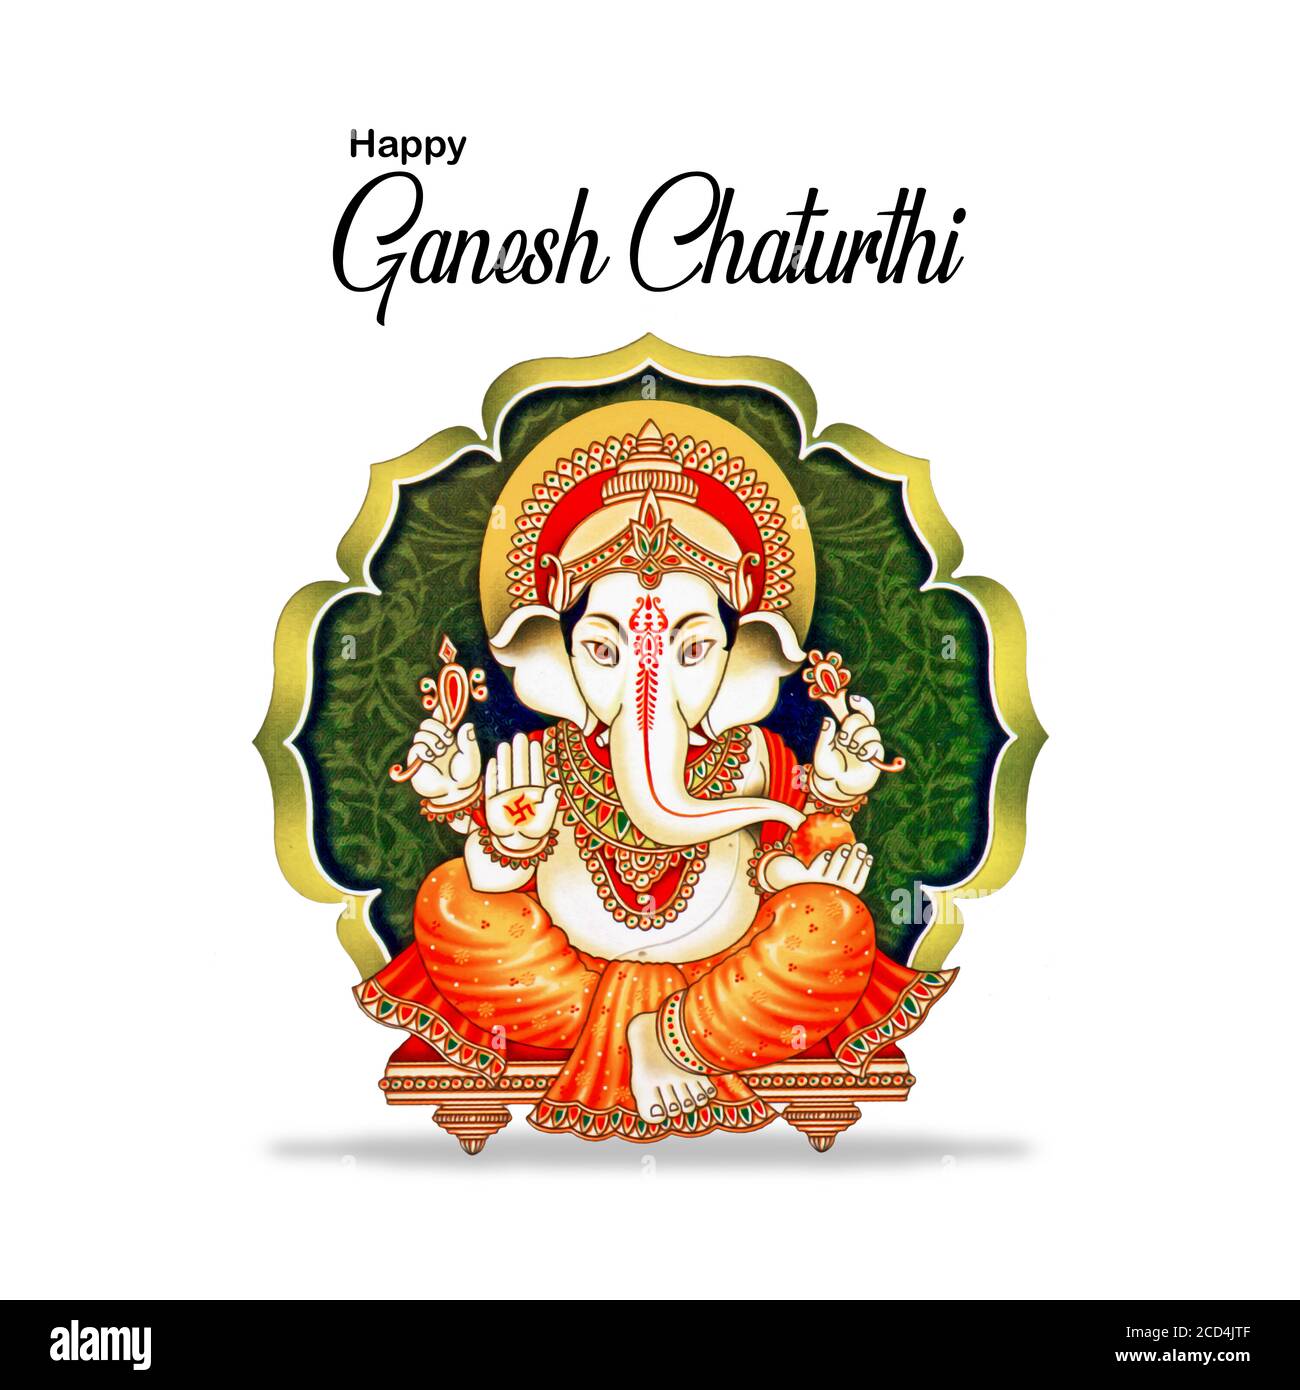 Ganesh chaturthi background hi-res stock photography and images - Alamy